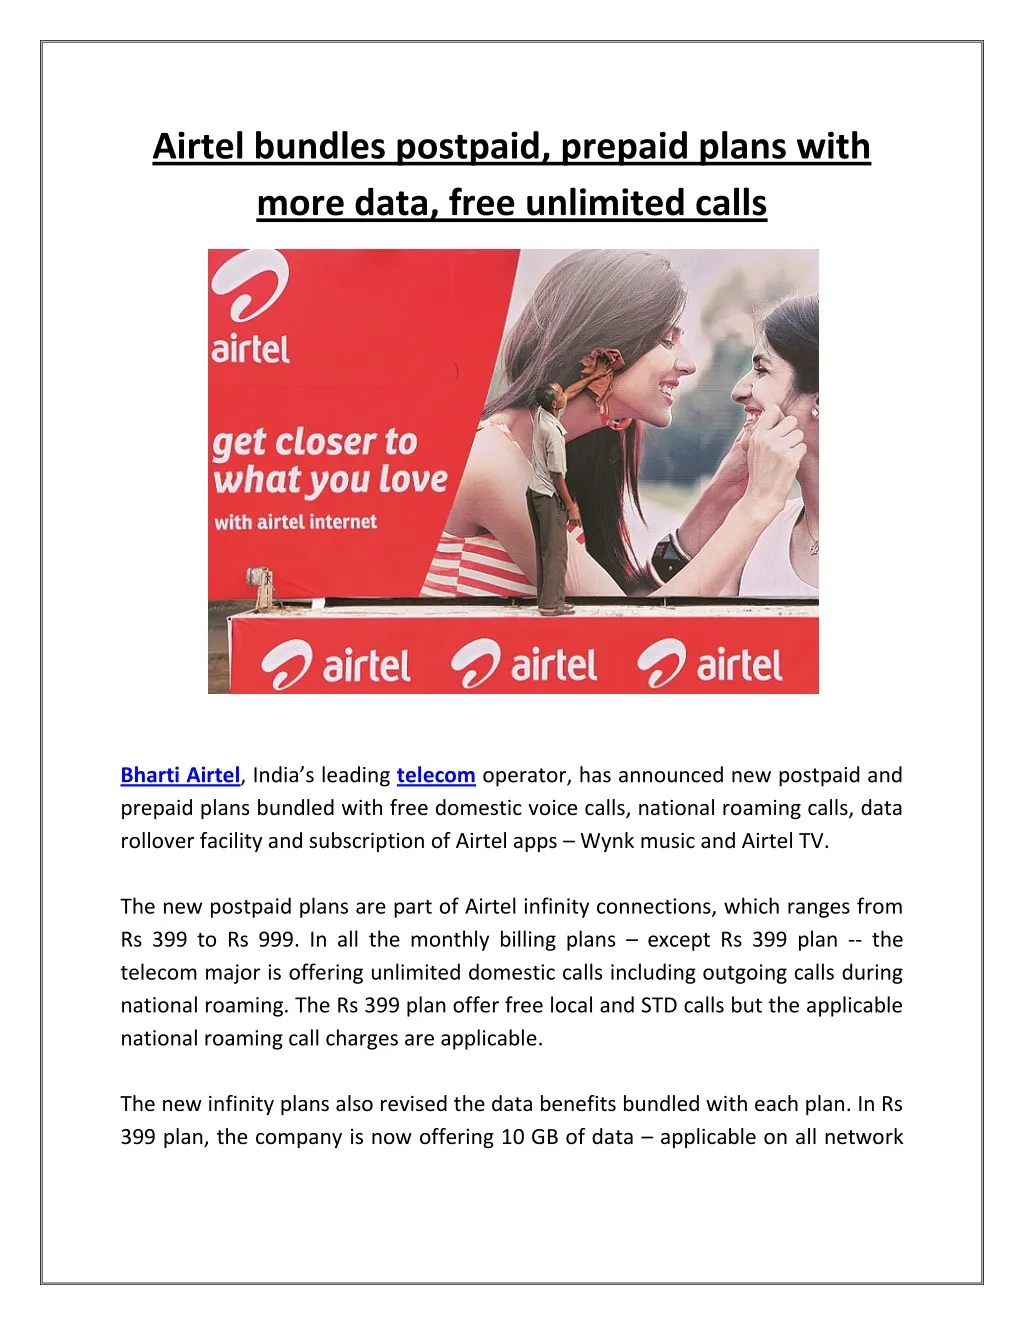 airtel bundles postpaid prepaid plans with more